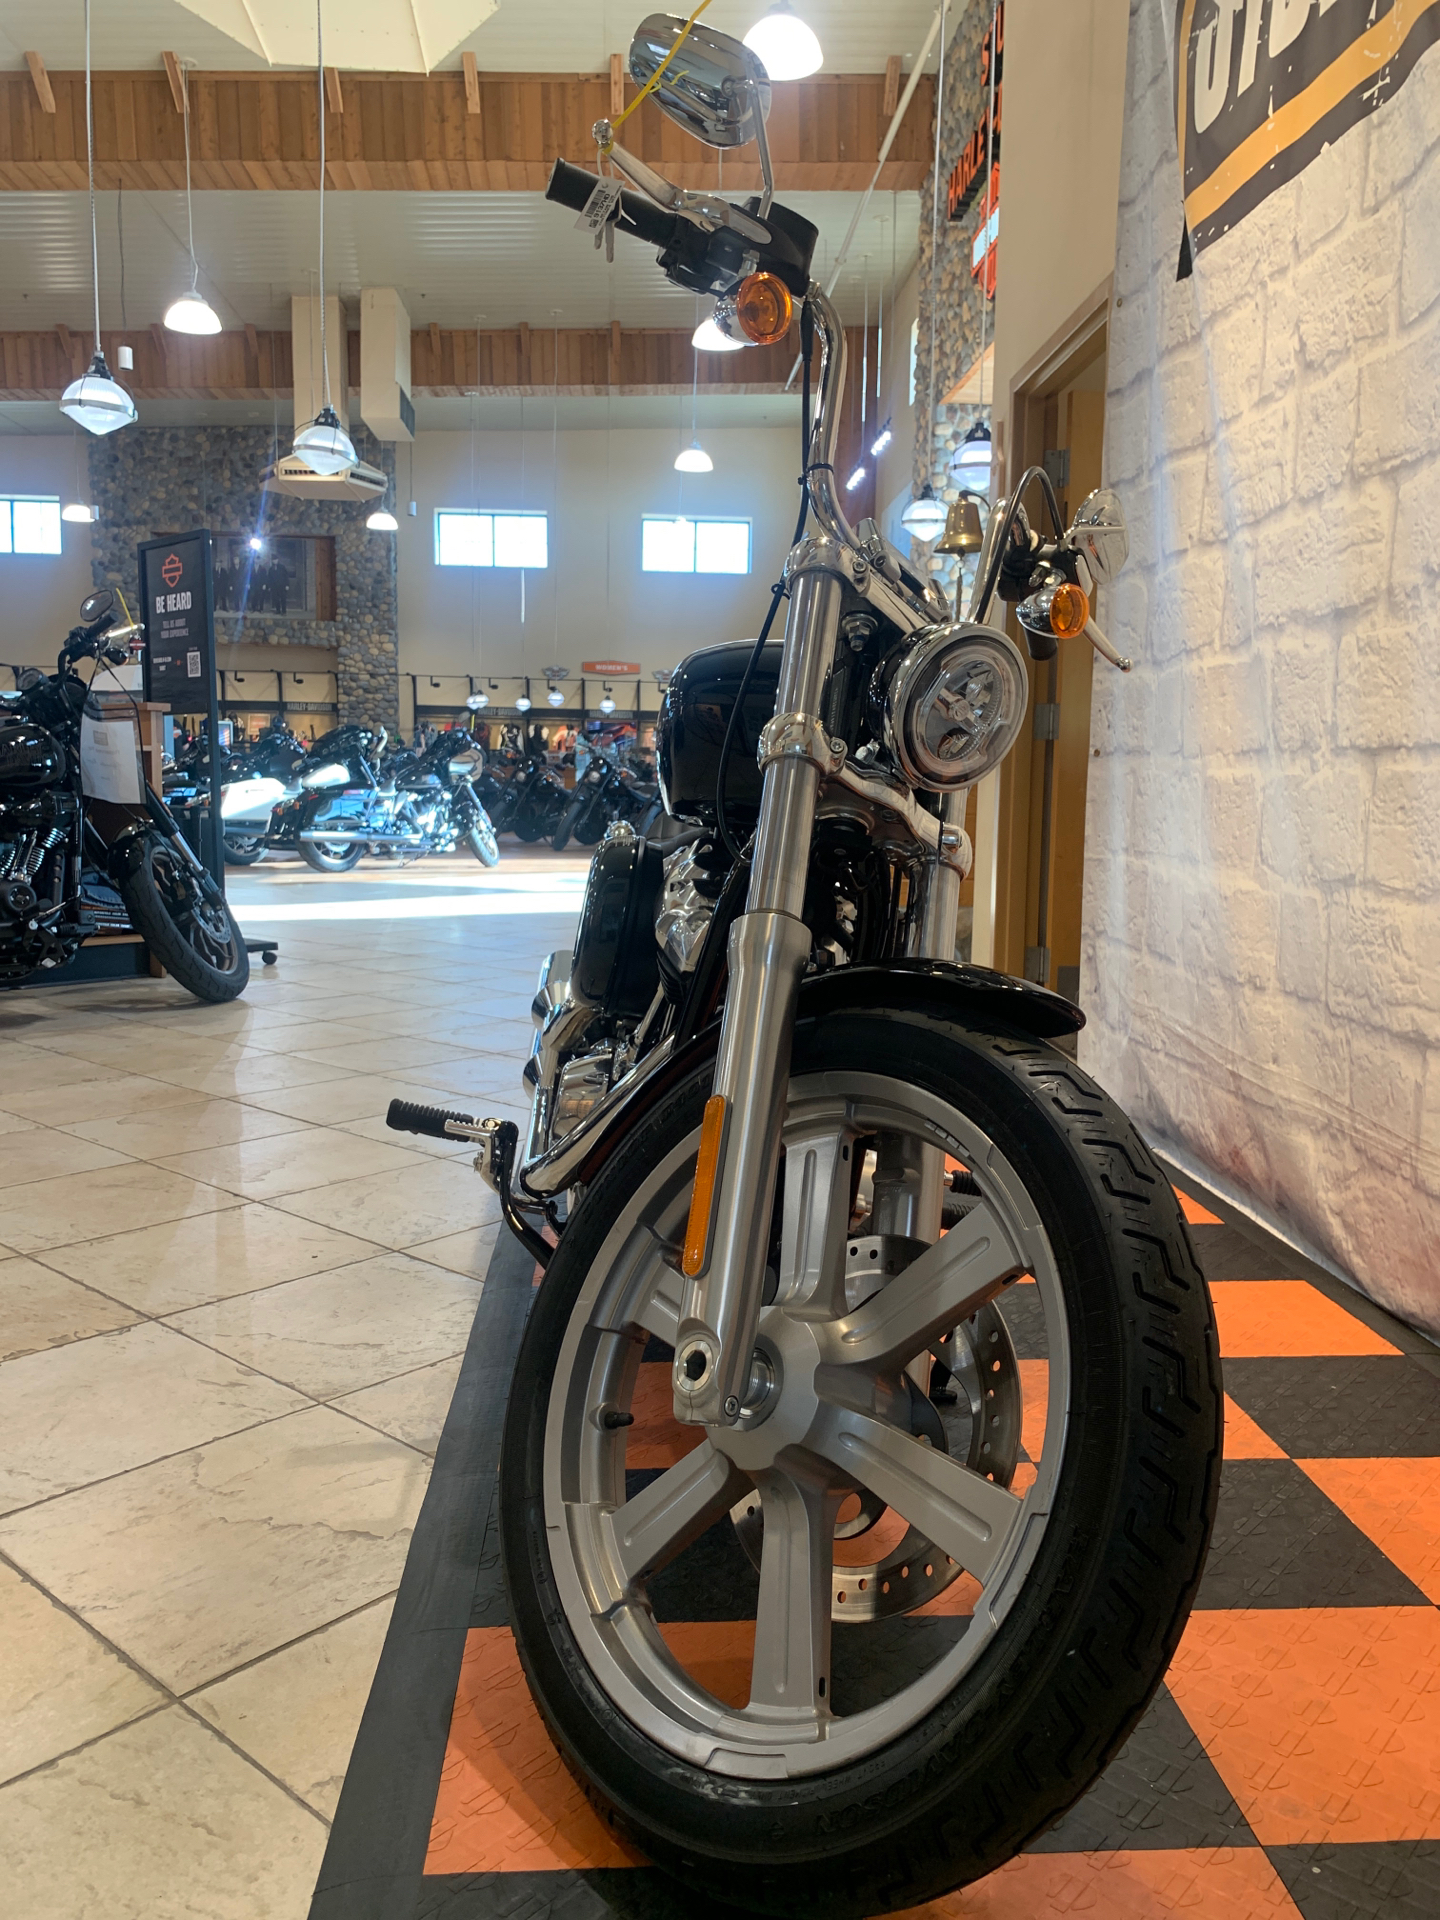 2023 Harley-Davidson Softail® Standard in Houston, Texas - Photo 4